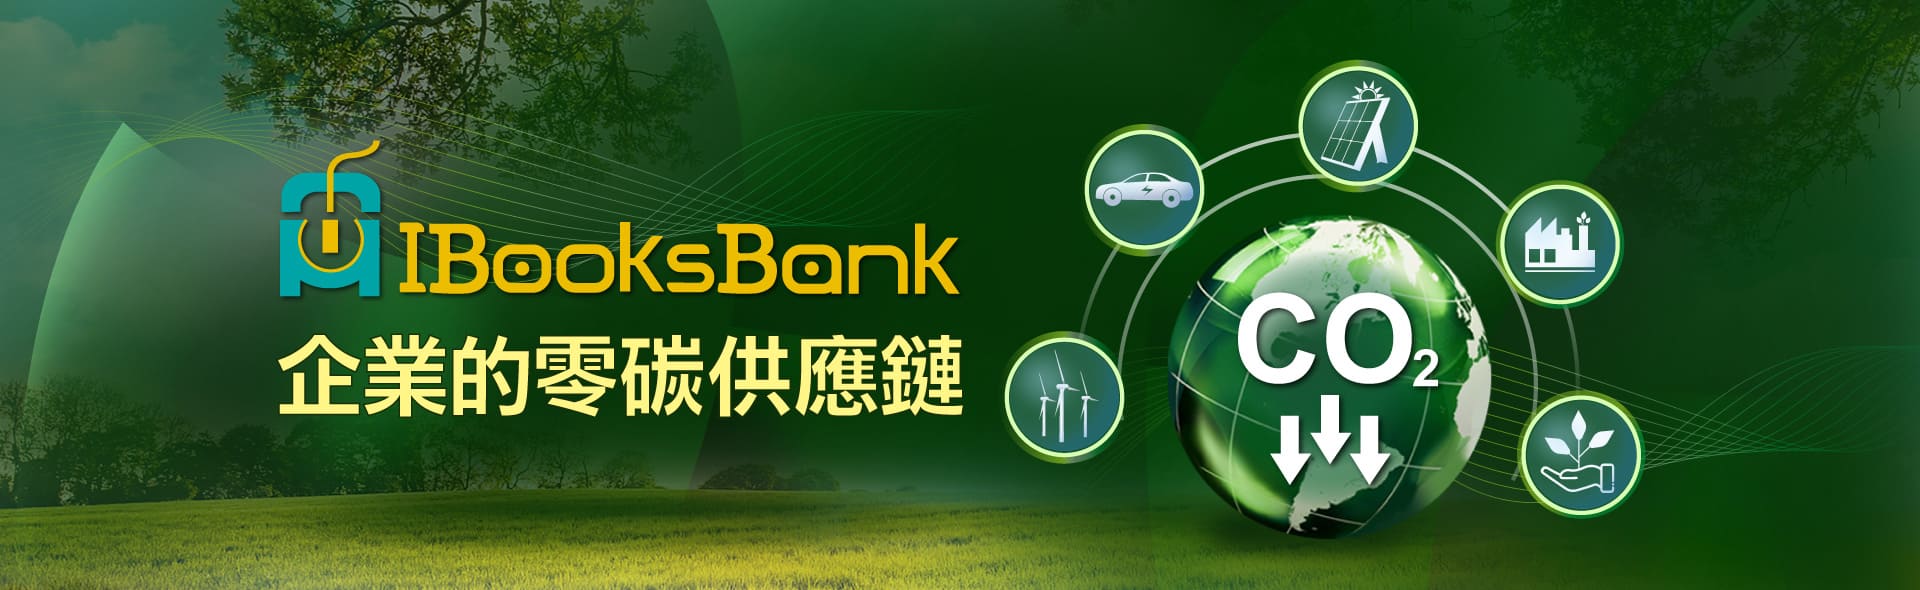 8.AIBooksBank企業的零碳供應鏈